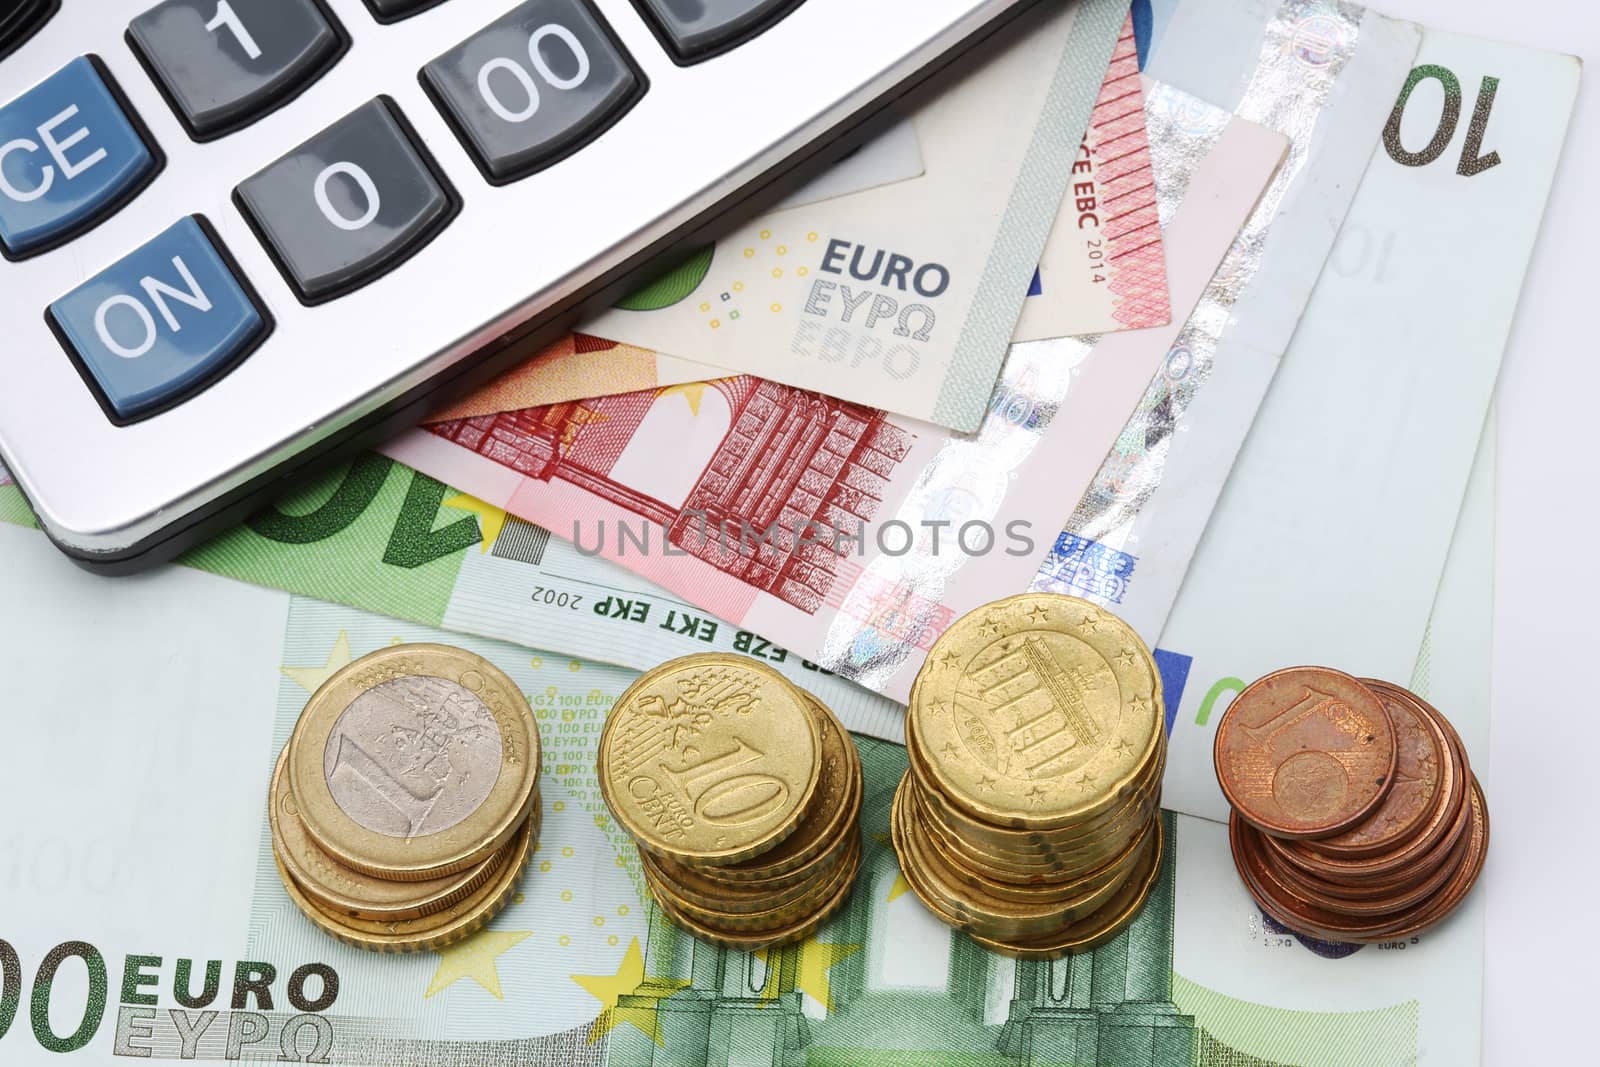 Calculator, euro bills and coins close up